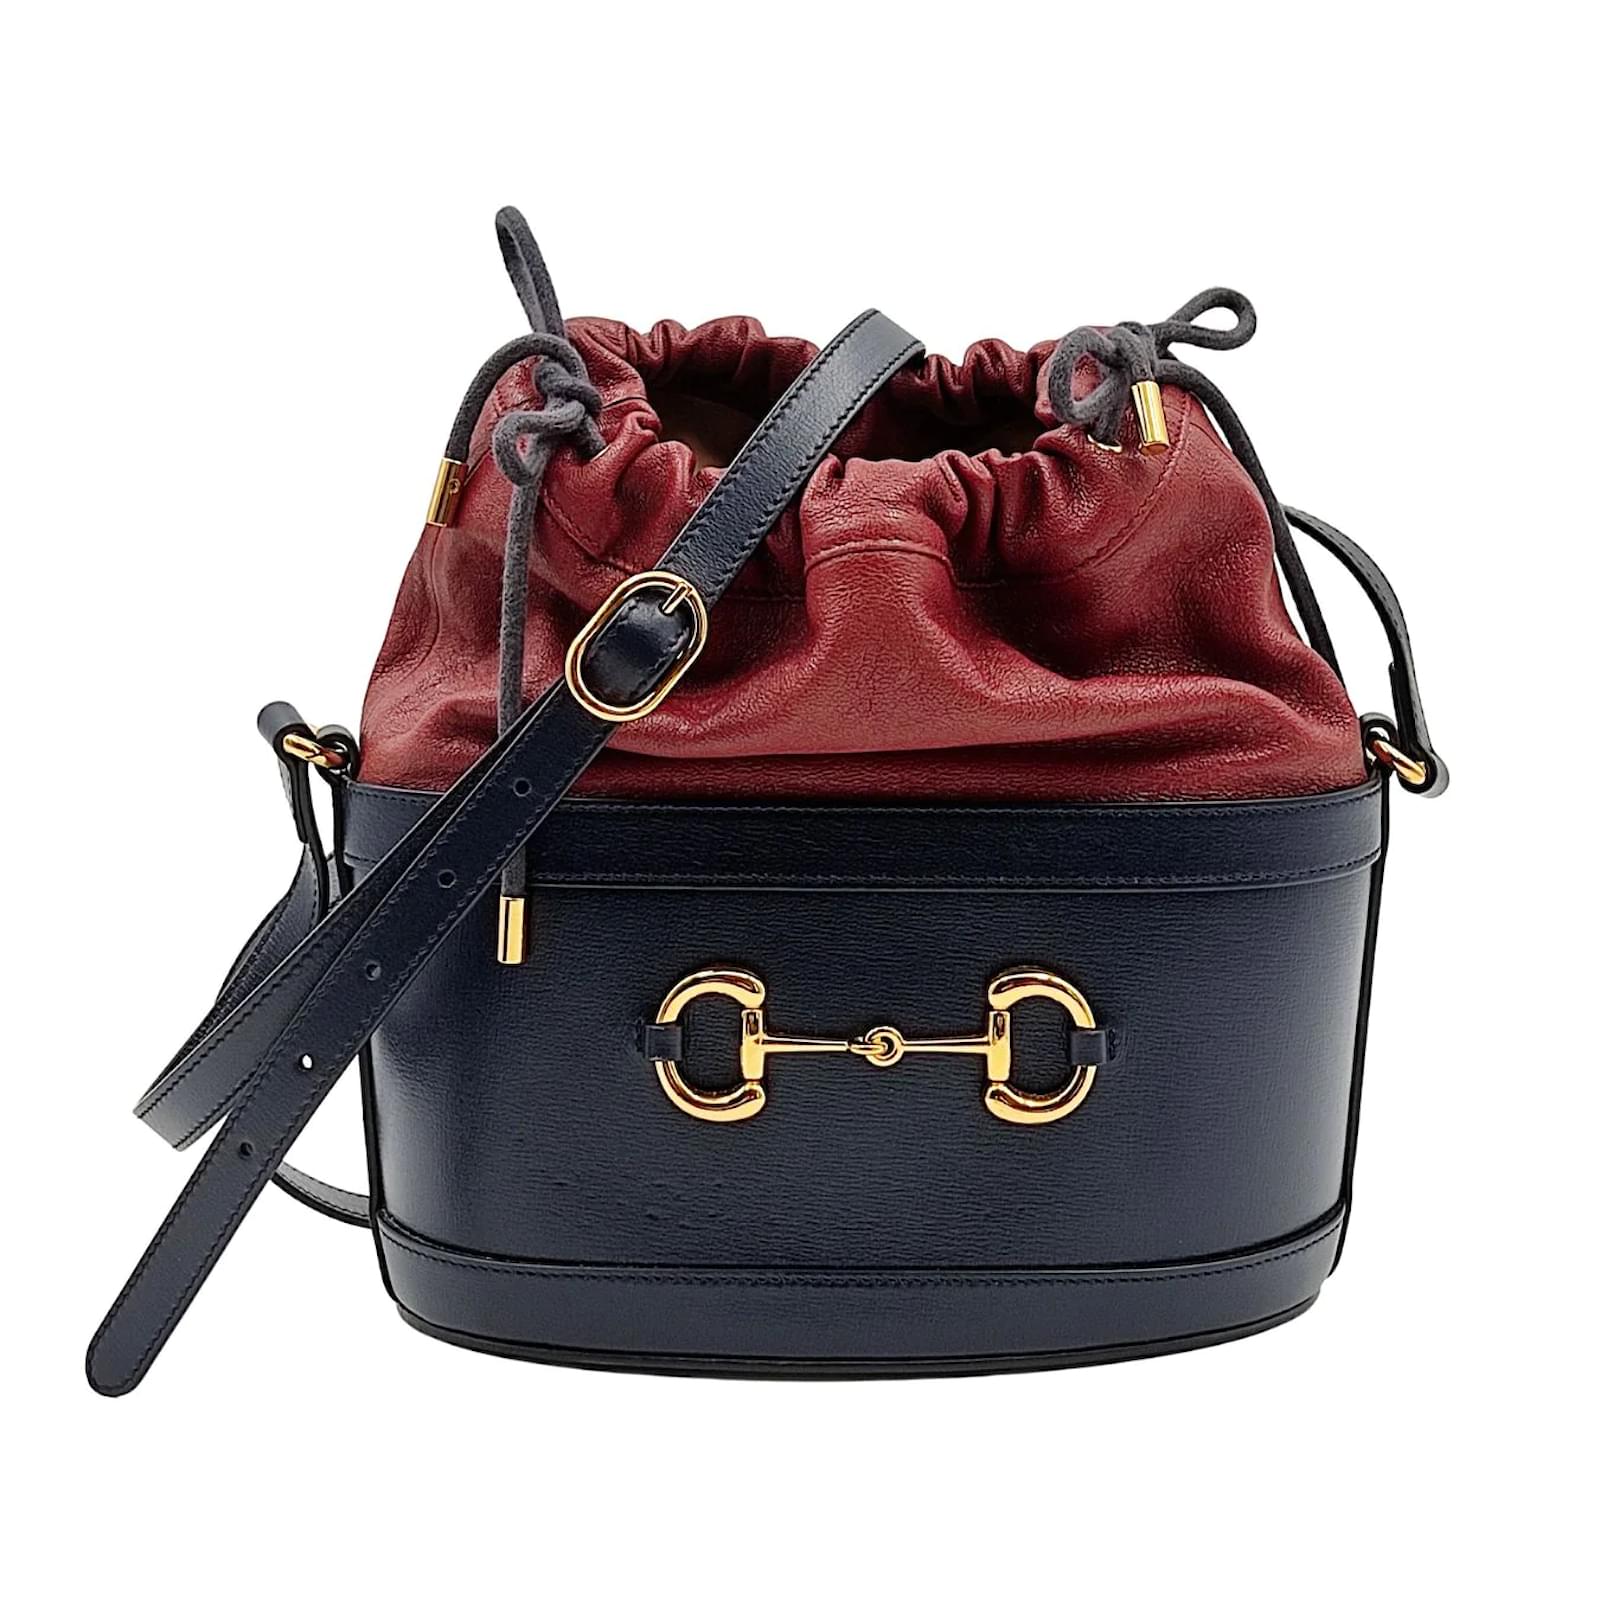 Gucci Gucci 1955 Horsebit Leather Shoulder Bag burgundy